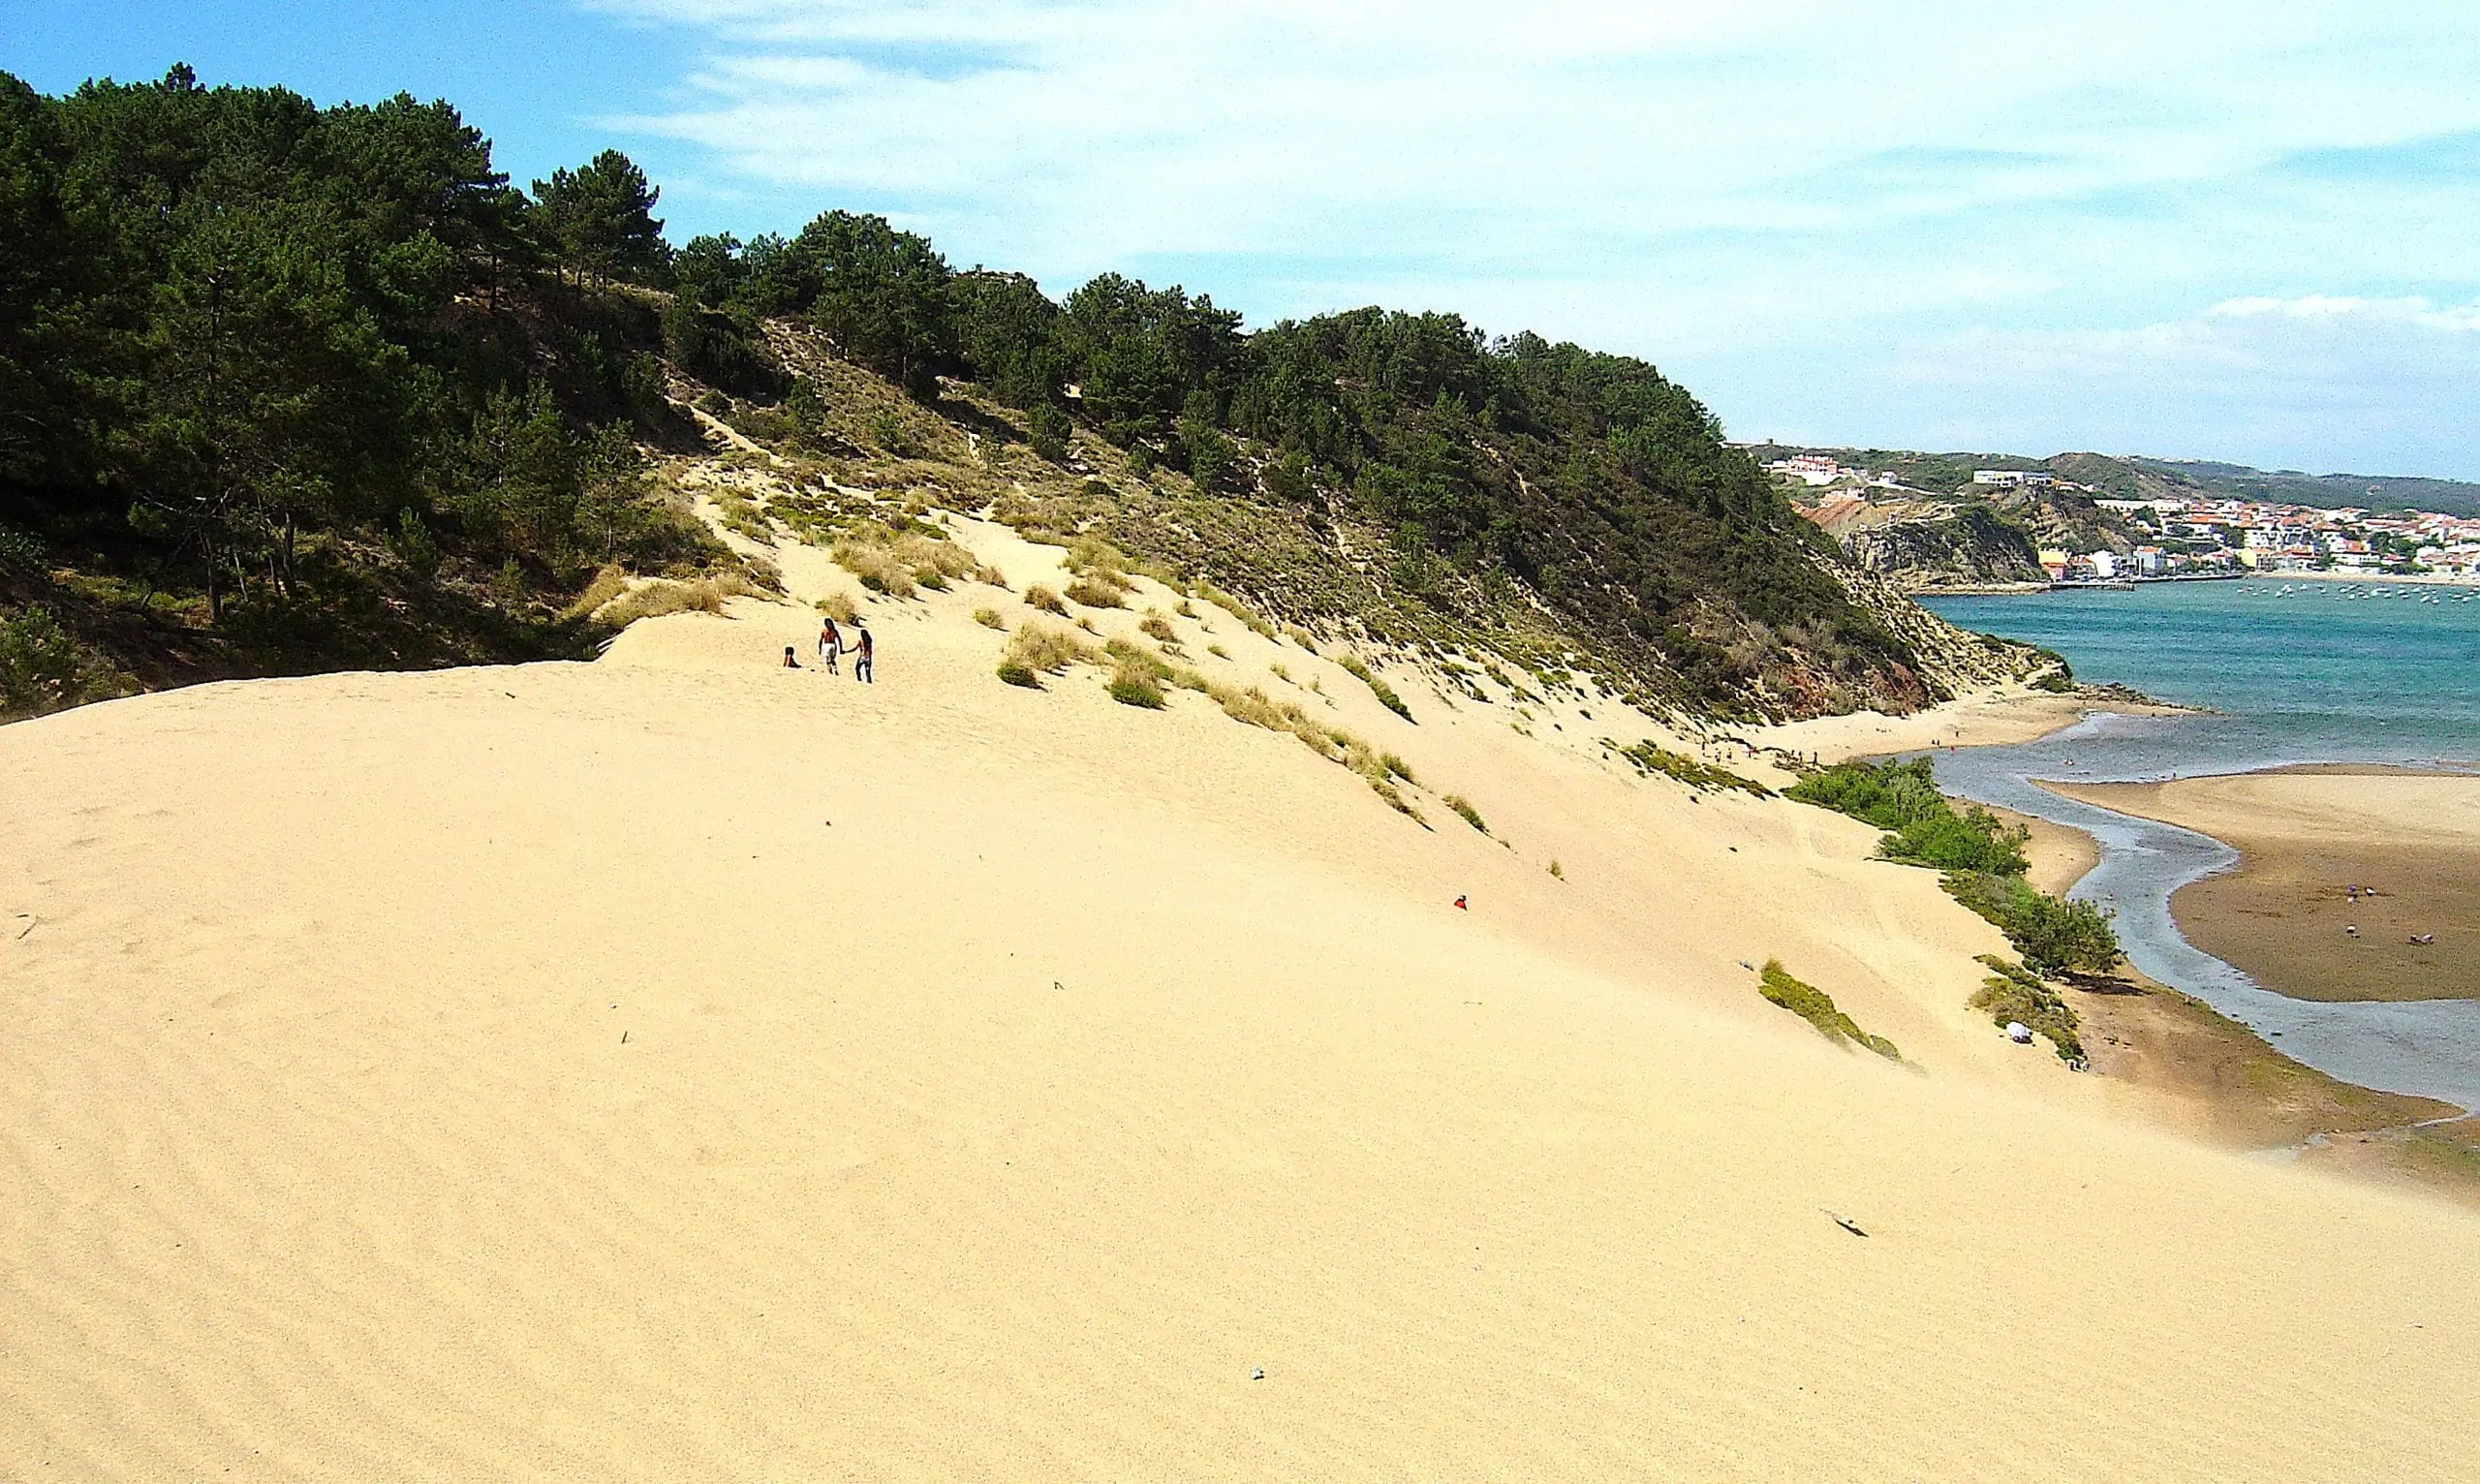 Sand surfing at the huge sand dune at Salir do Porto